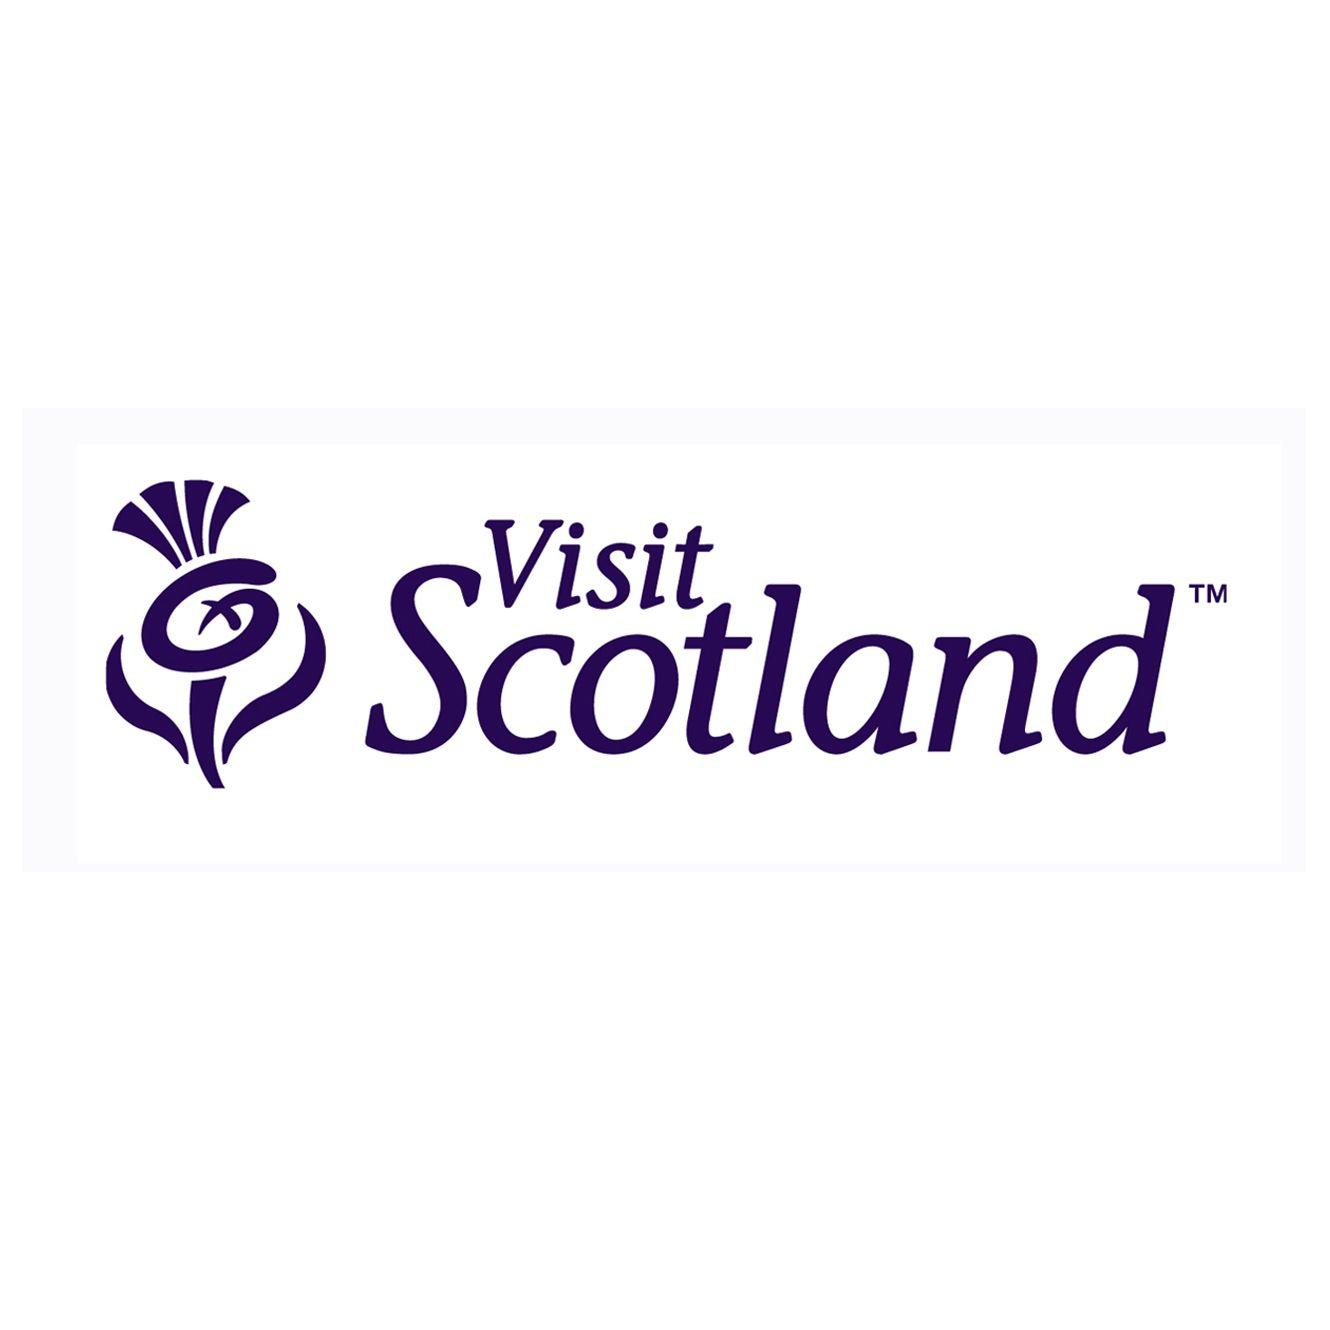 Scotland Logo - Visit Scotland - logo